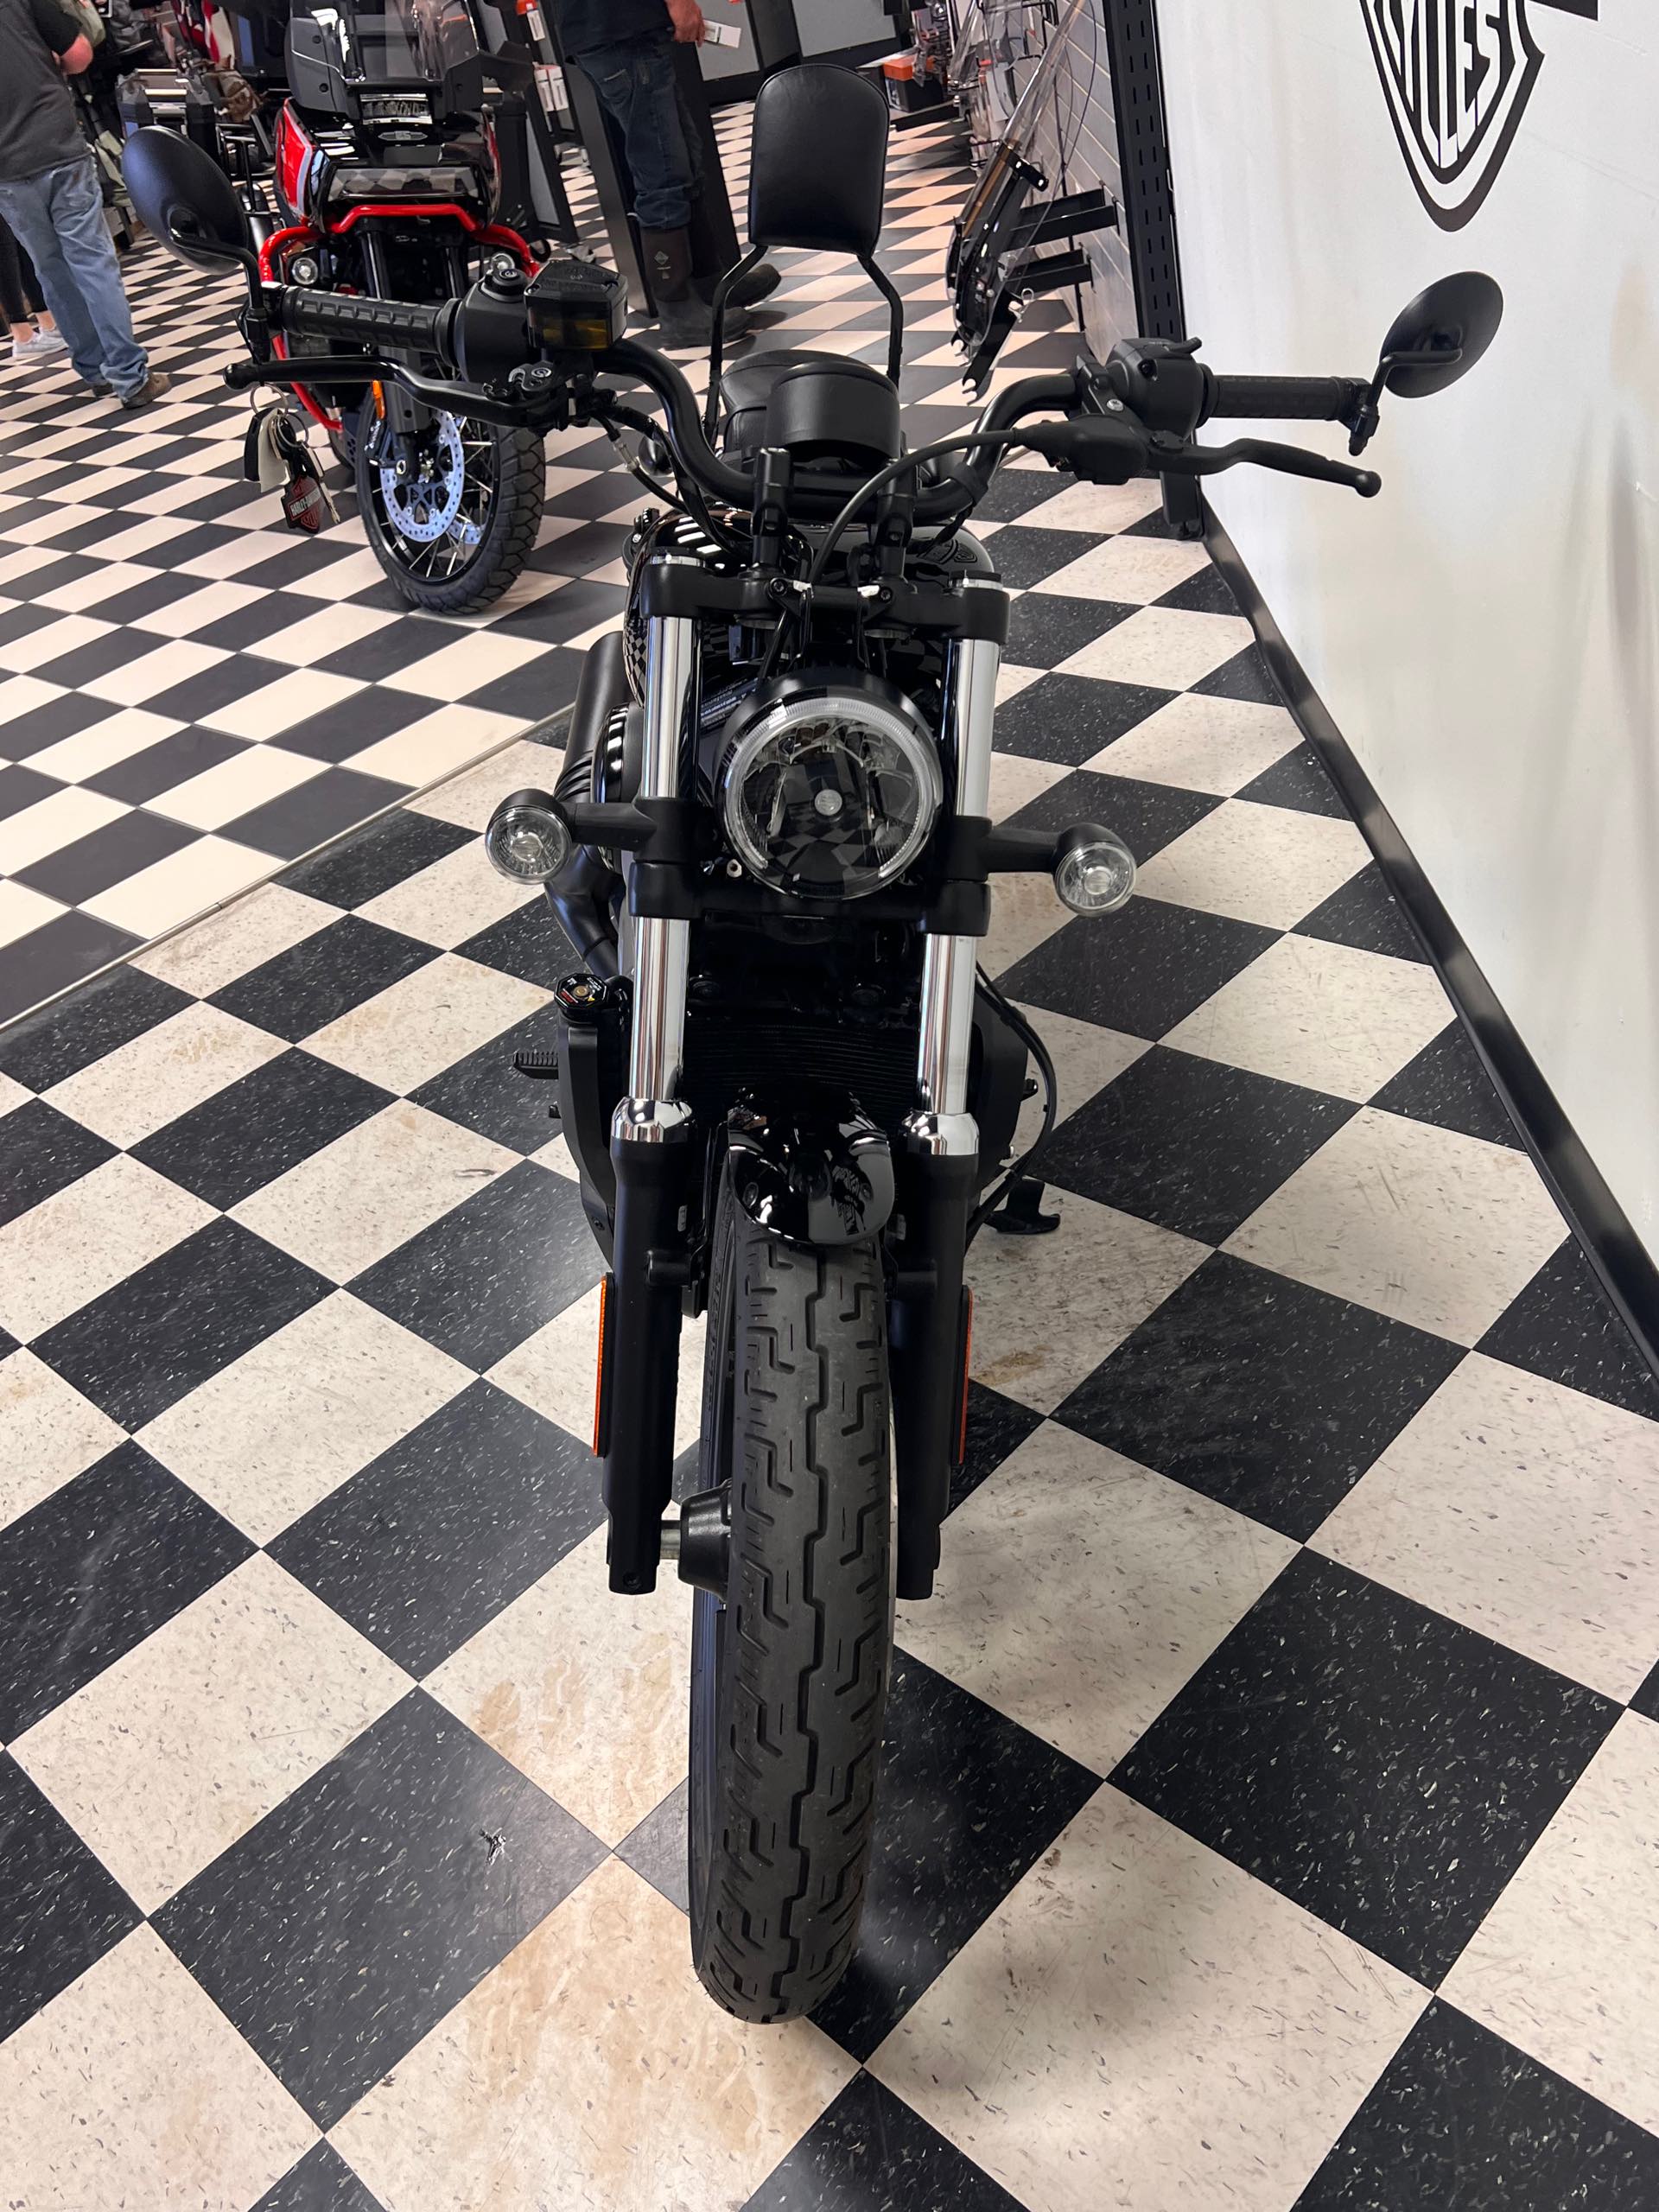 2023 Harley-Davidson Sportster Nightster at Deluxe Harley Davidson